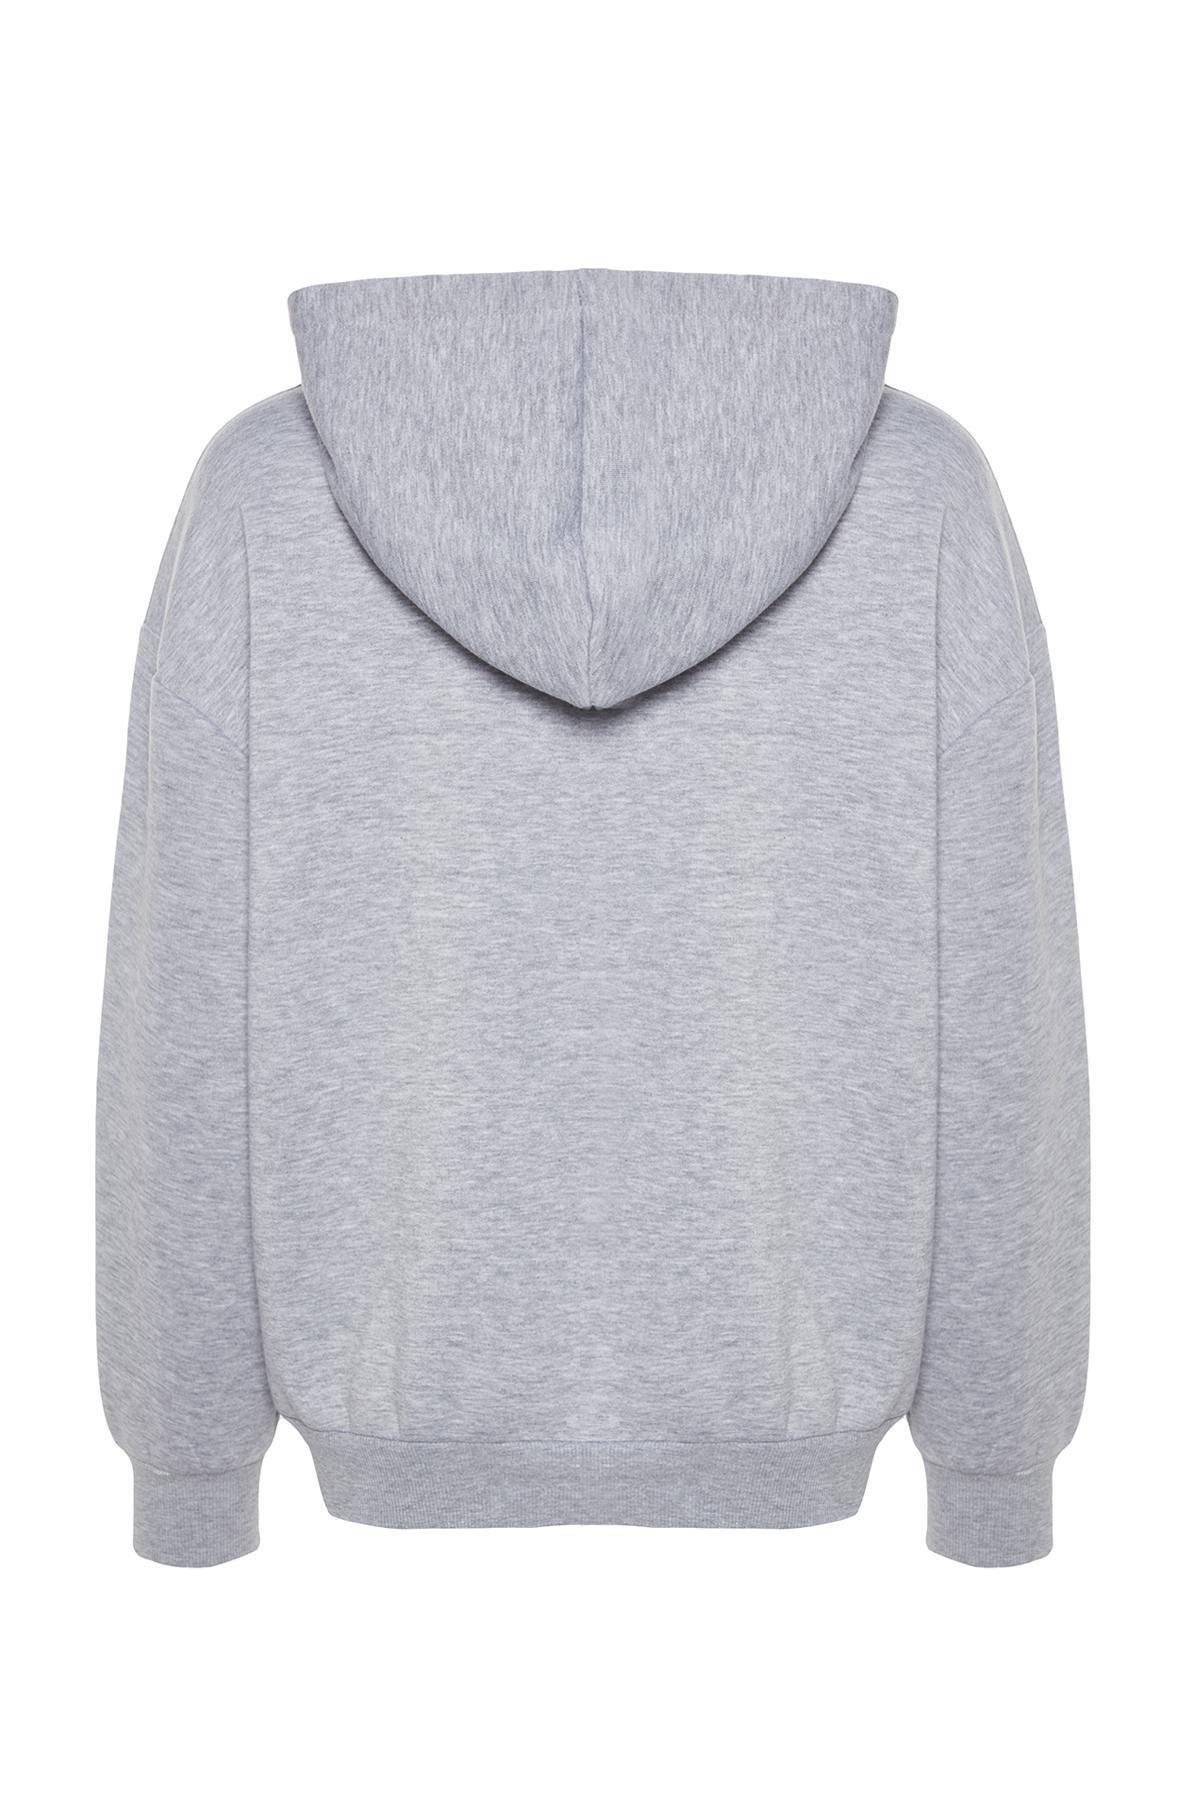 Trendyol - Grey Oversized Knitted Hooded Sweatshirt